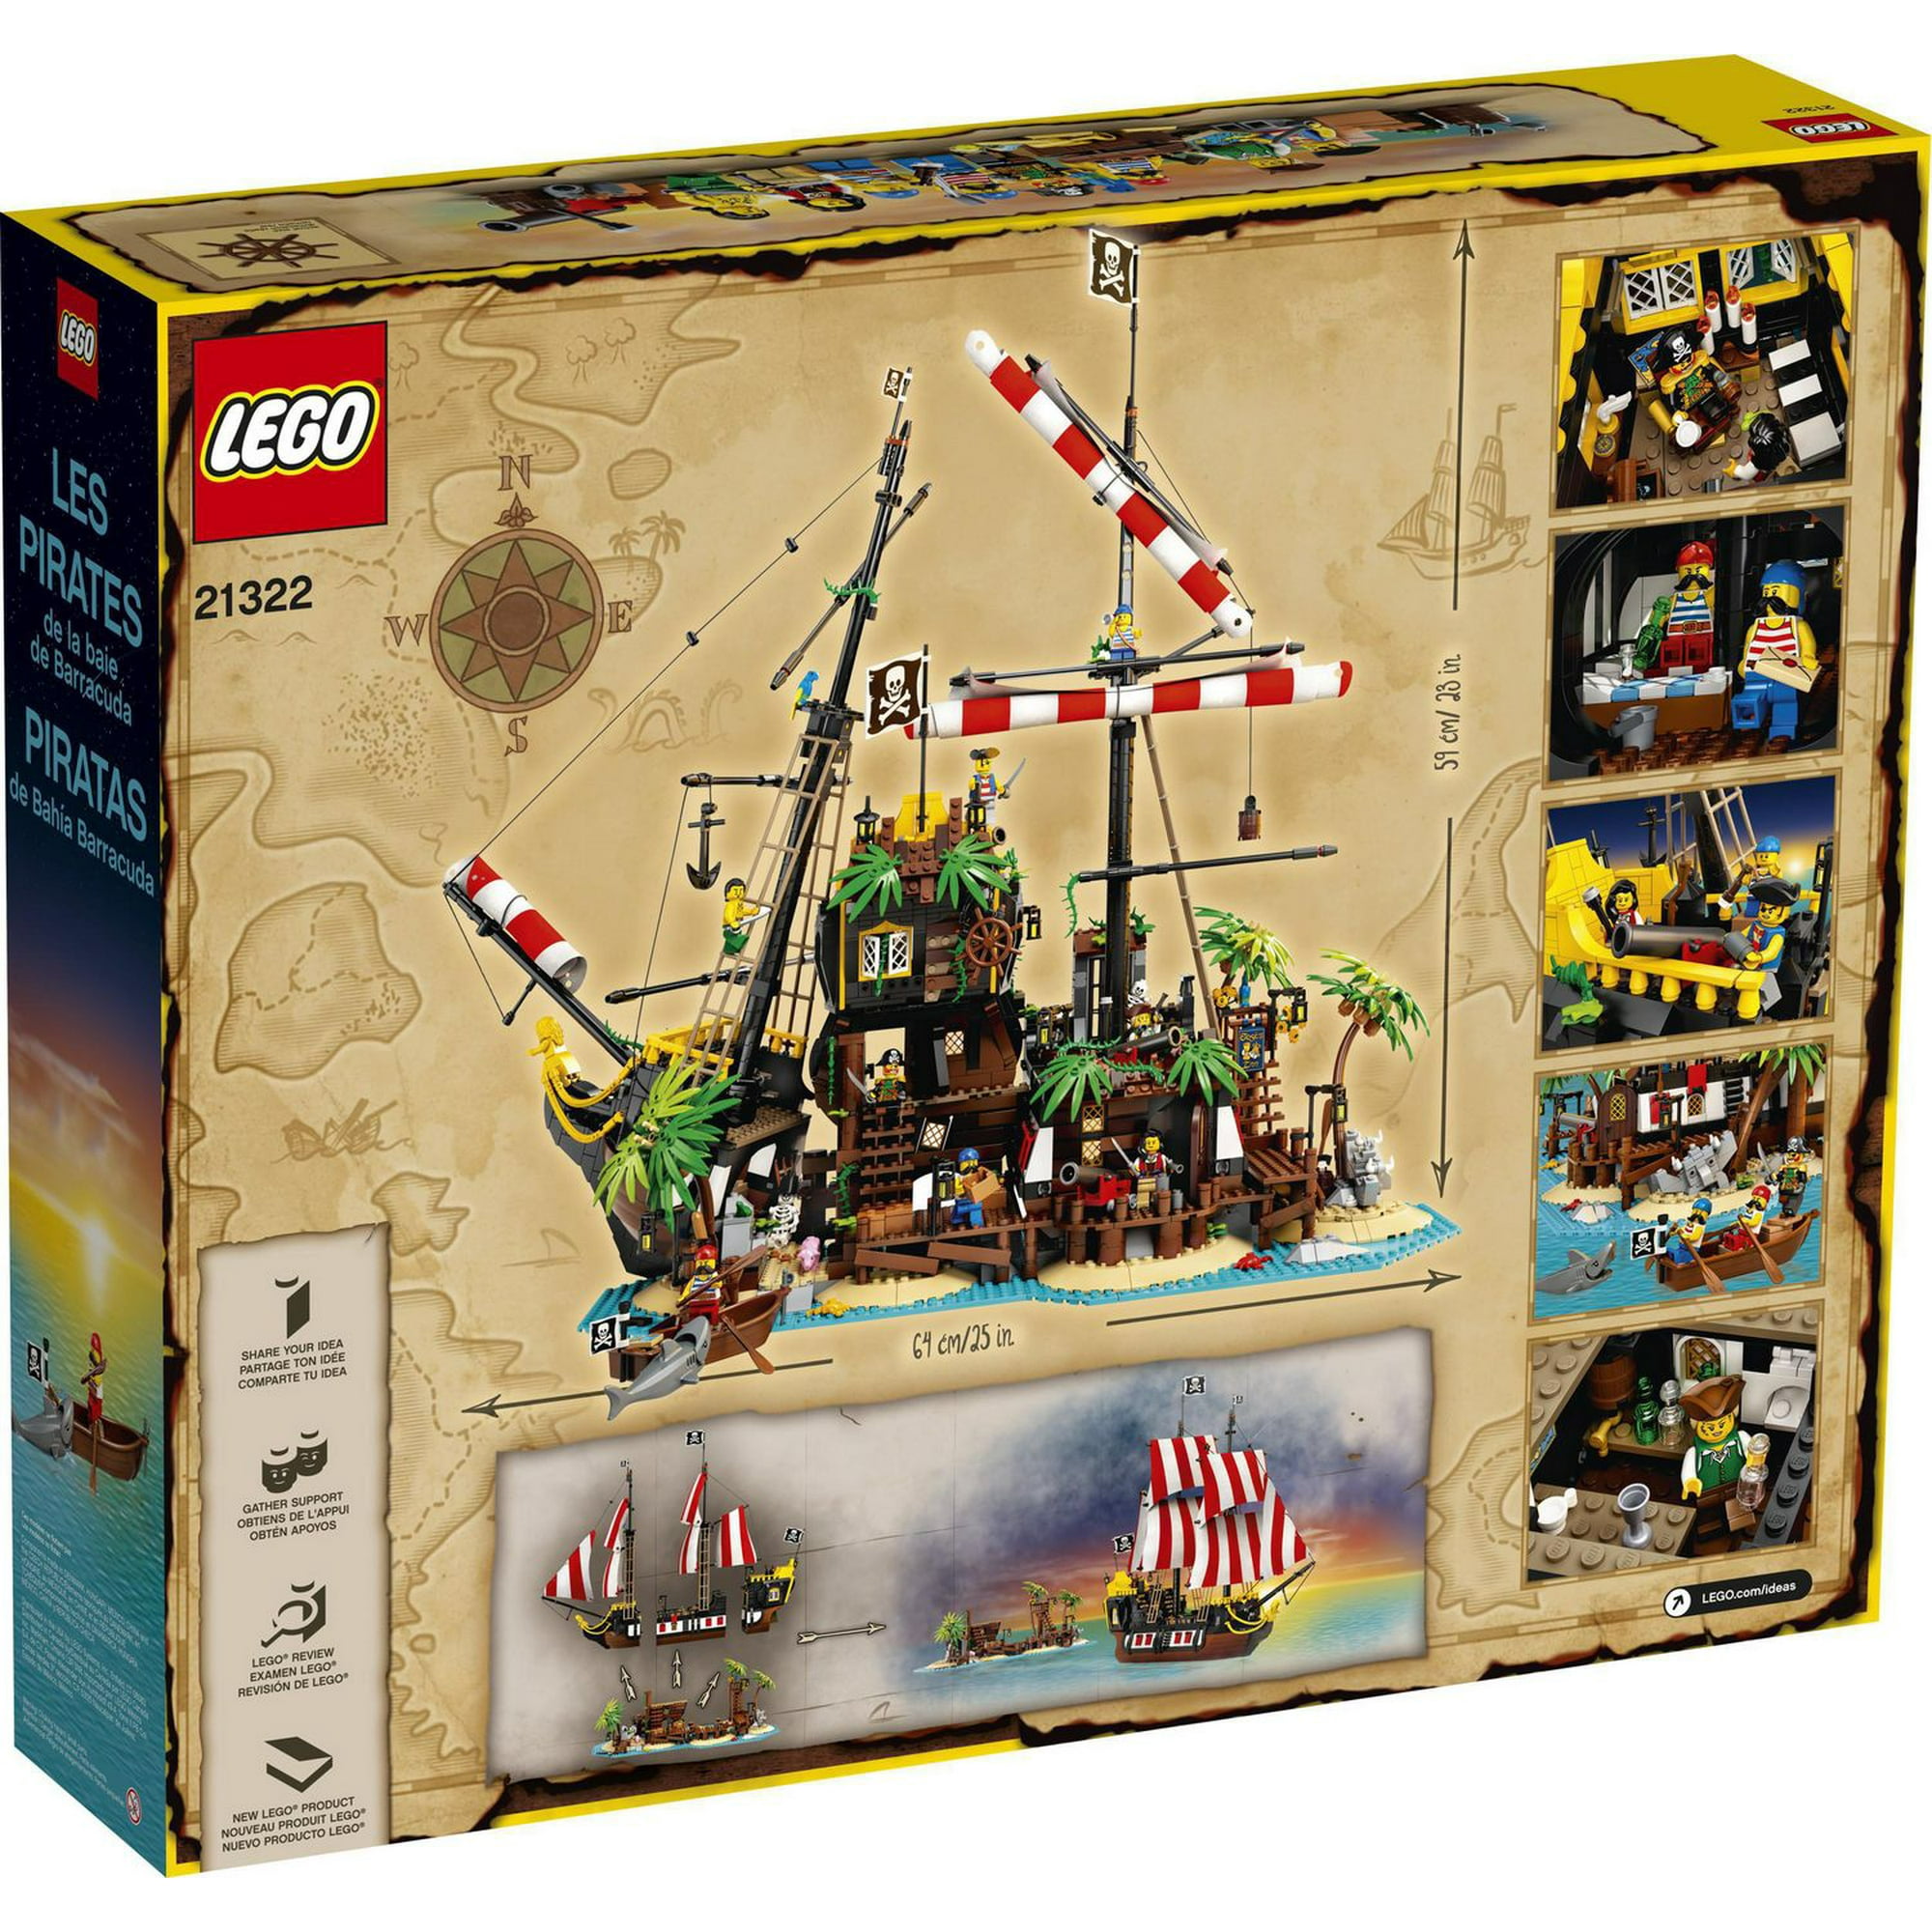 FREE Lego Pirates Mini Build, Treasure Hunt & Gift With Purchase